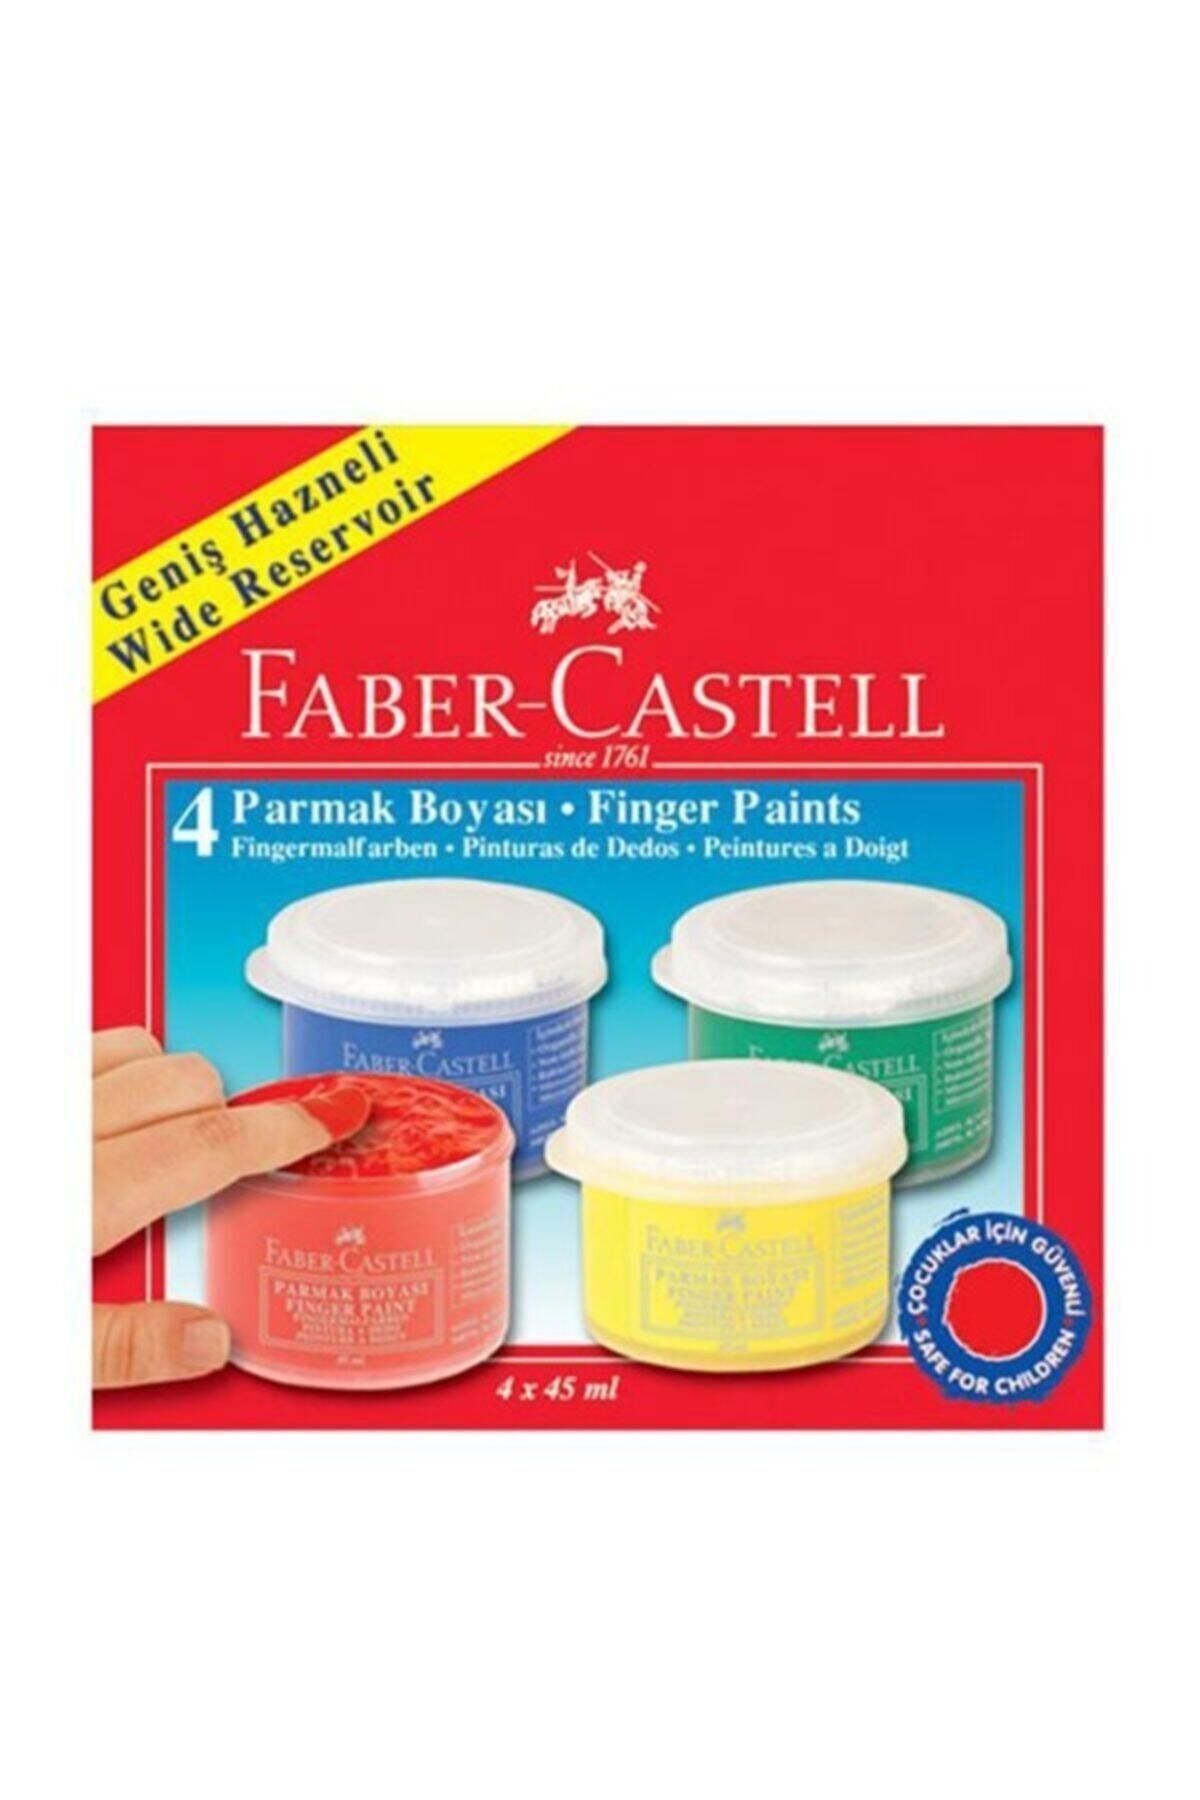 Faber Castell Parmak Boyası 4 Renk 45 ml 160412